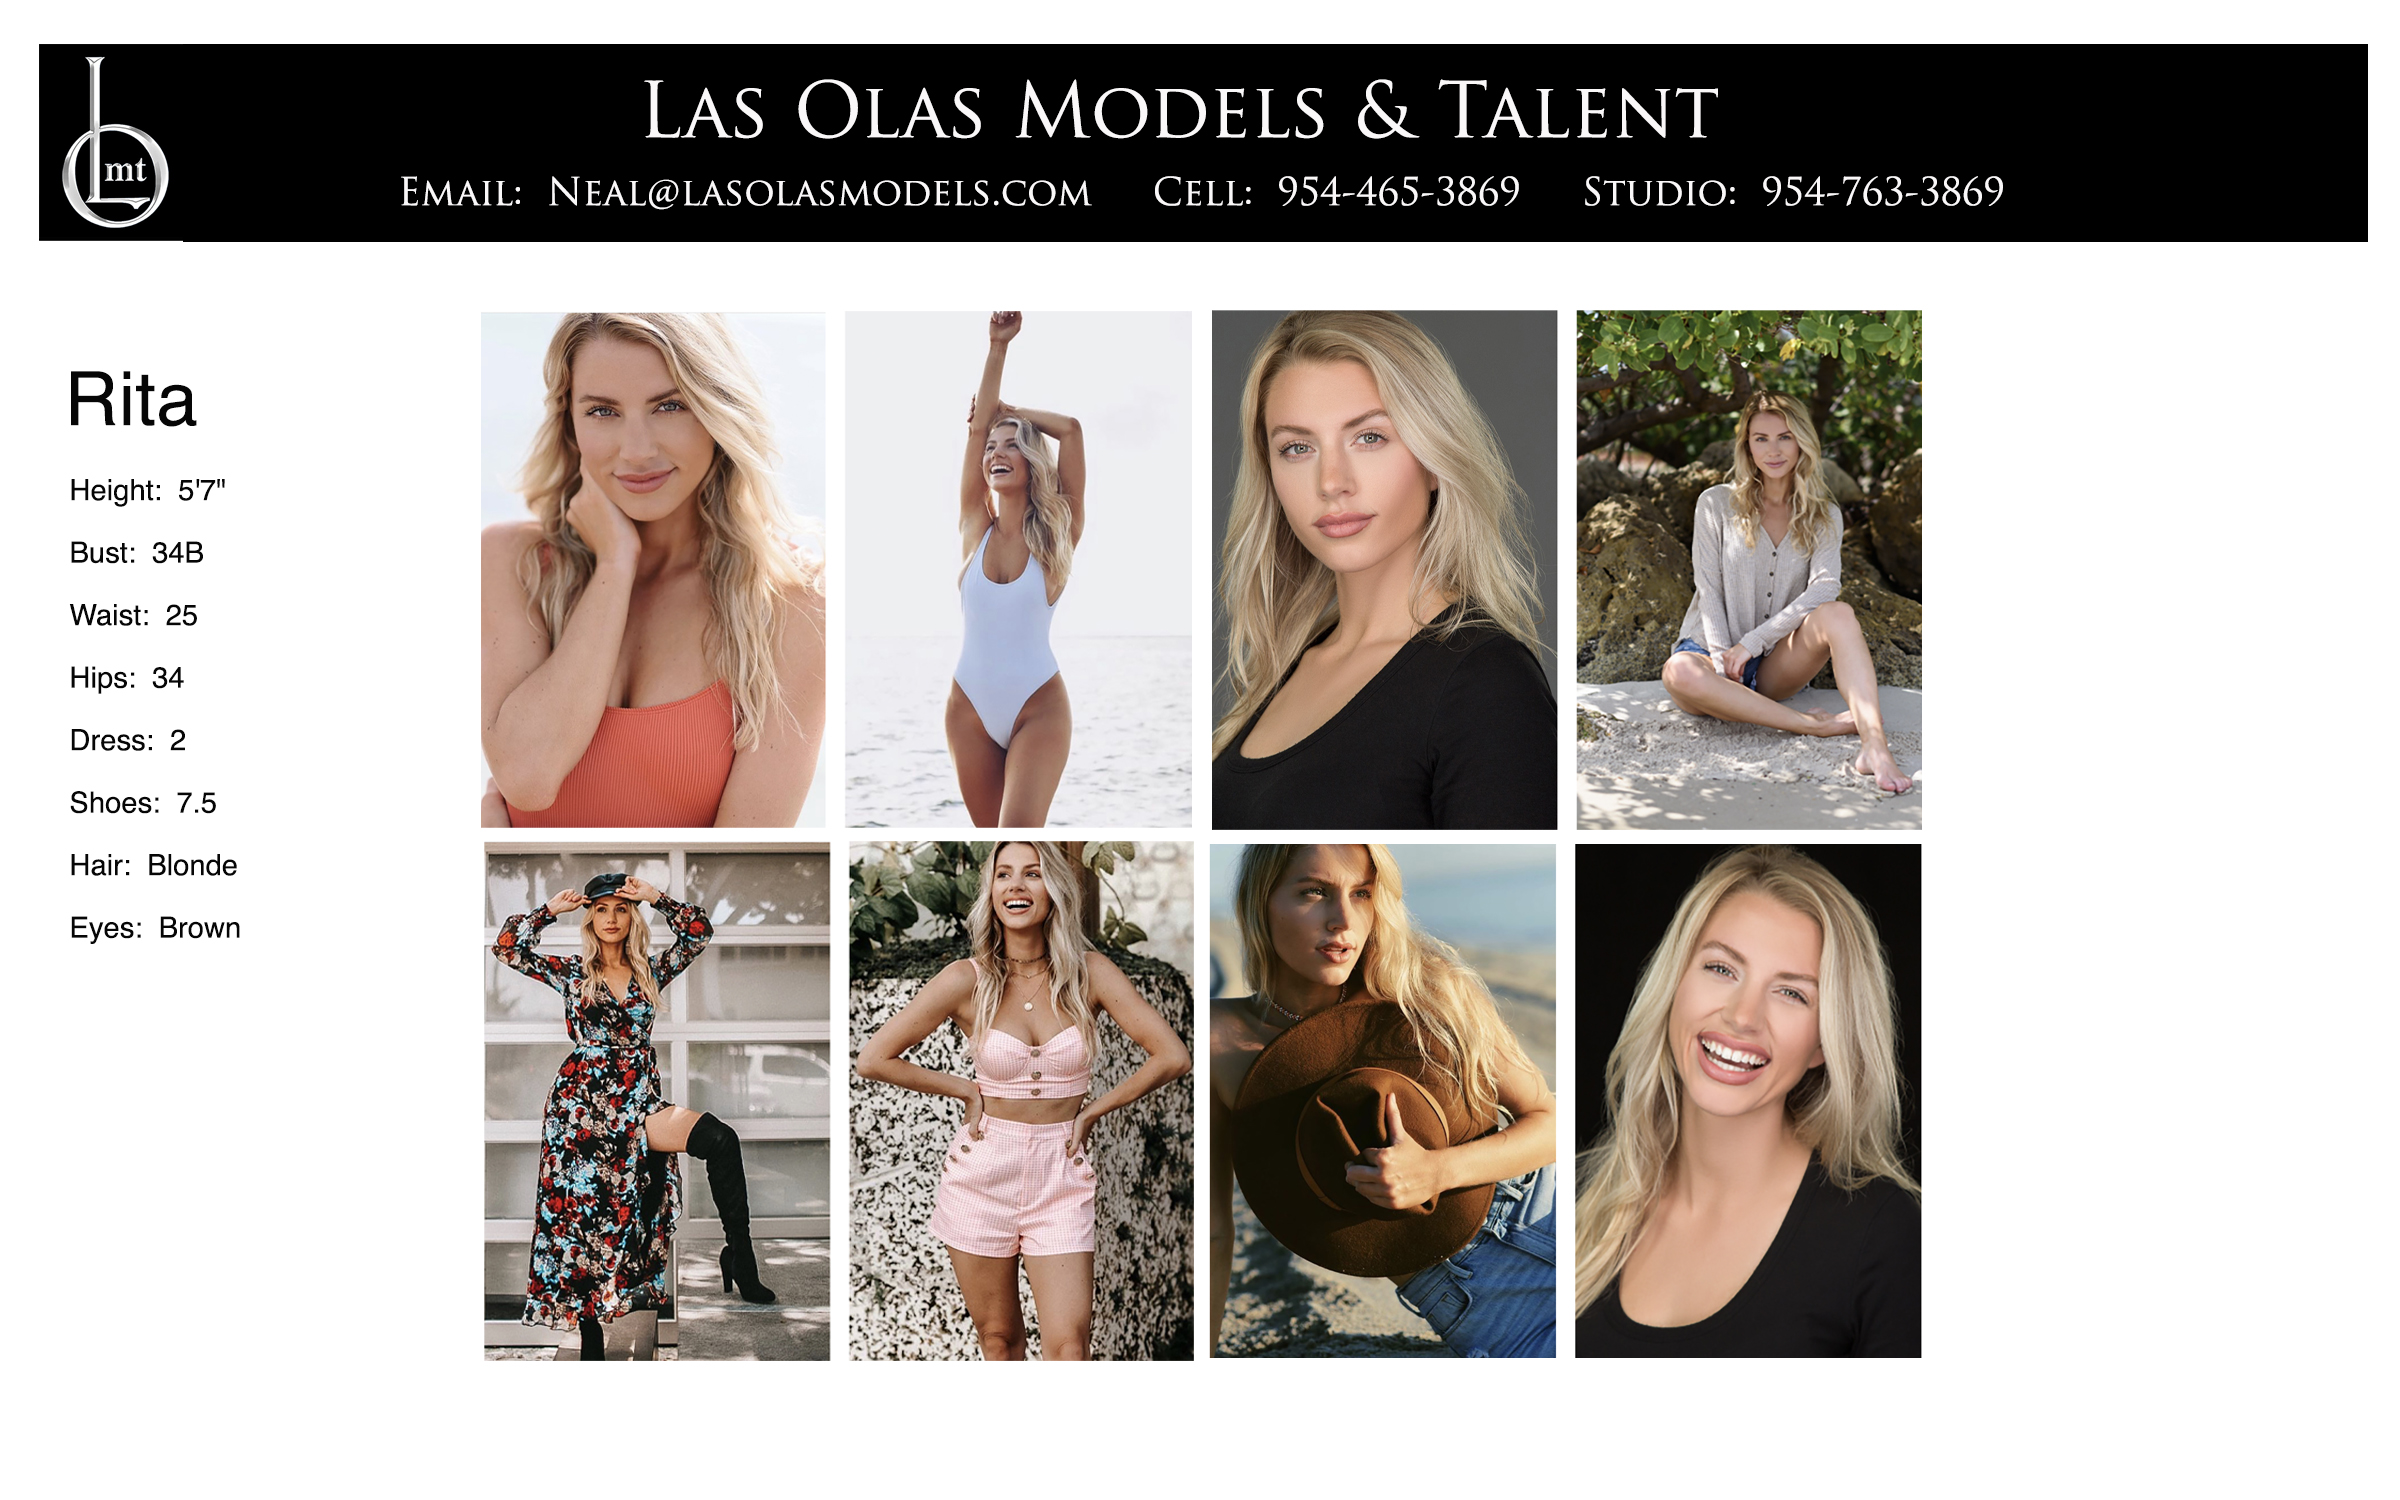 Models Fort Lauderdale Miami South Florida - Print Commercial Catalog Video Promotion Las Olas Models & Talent - Rita Comp